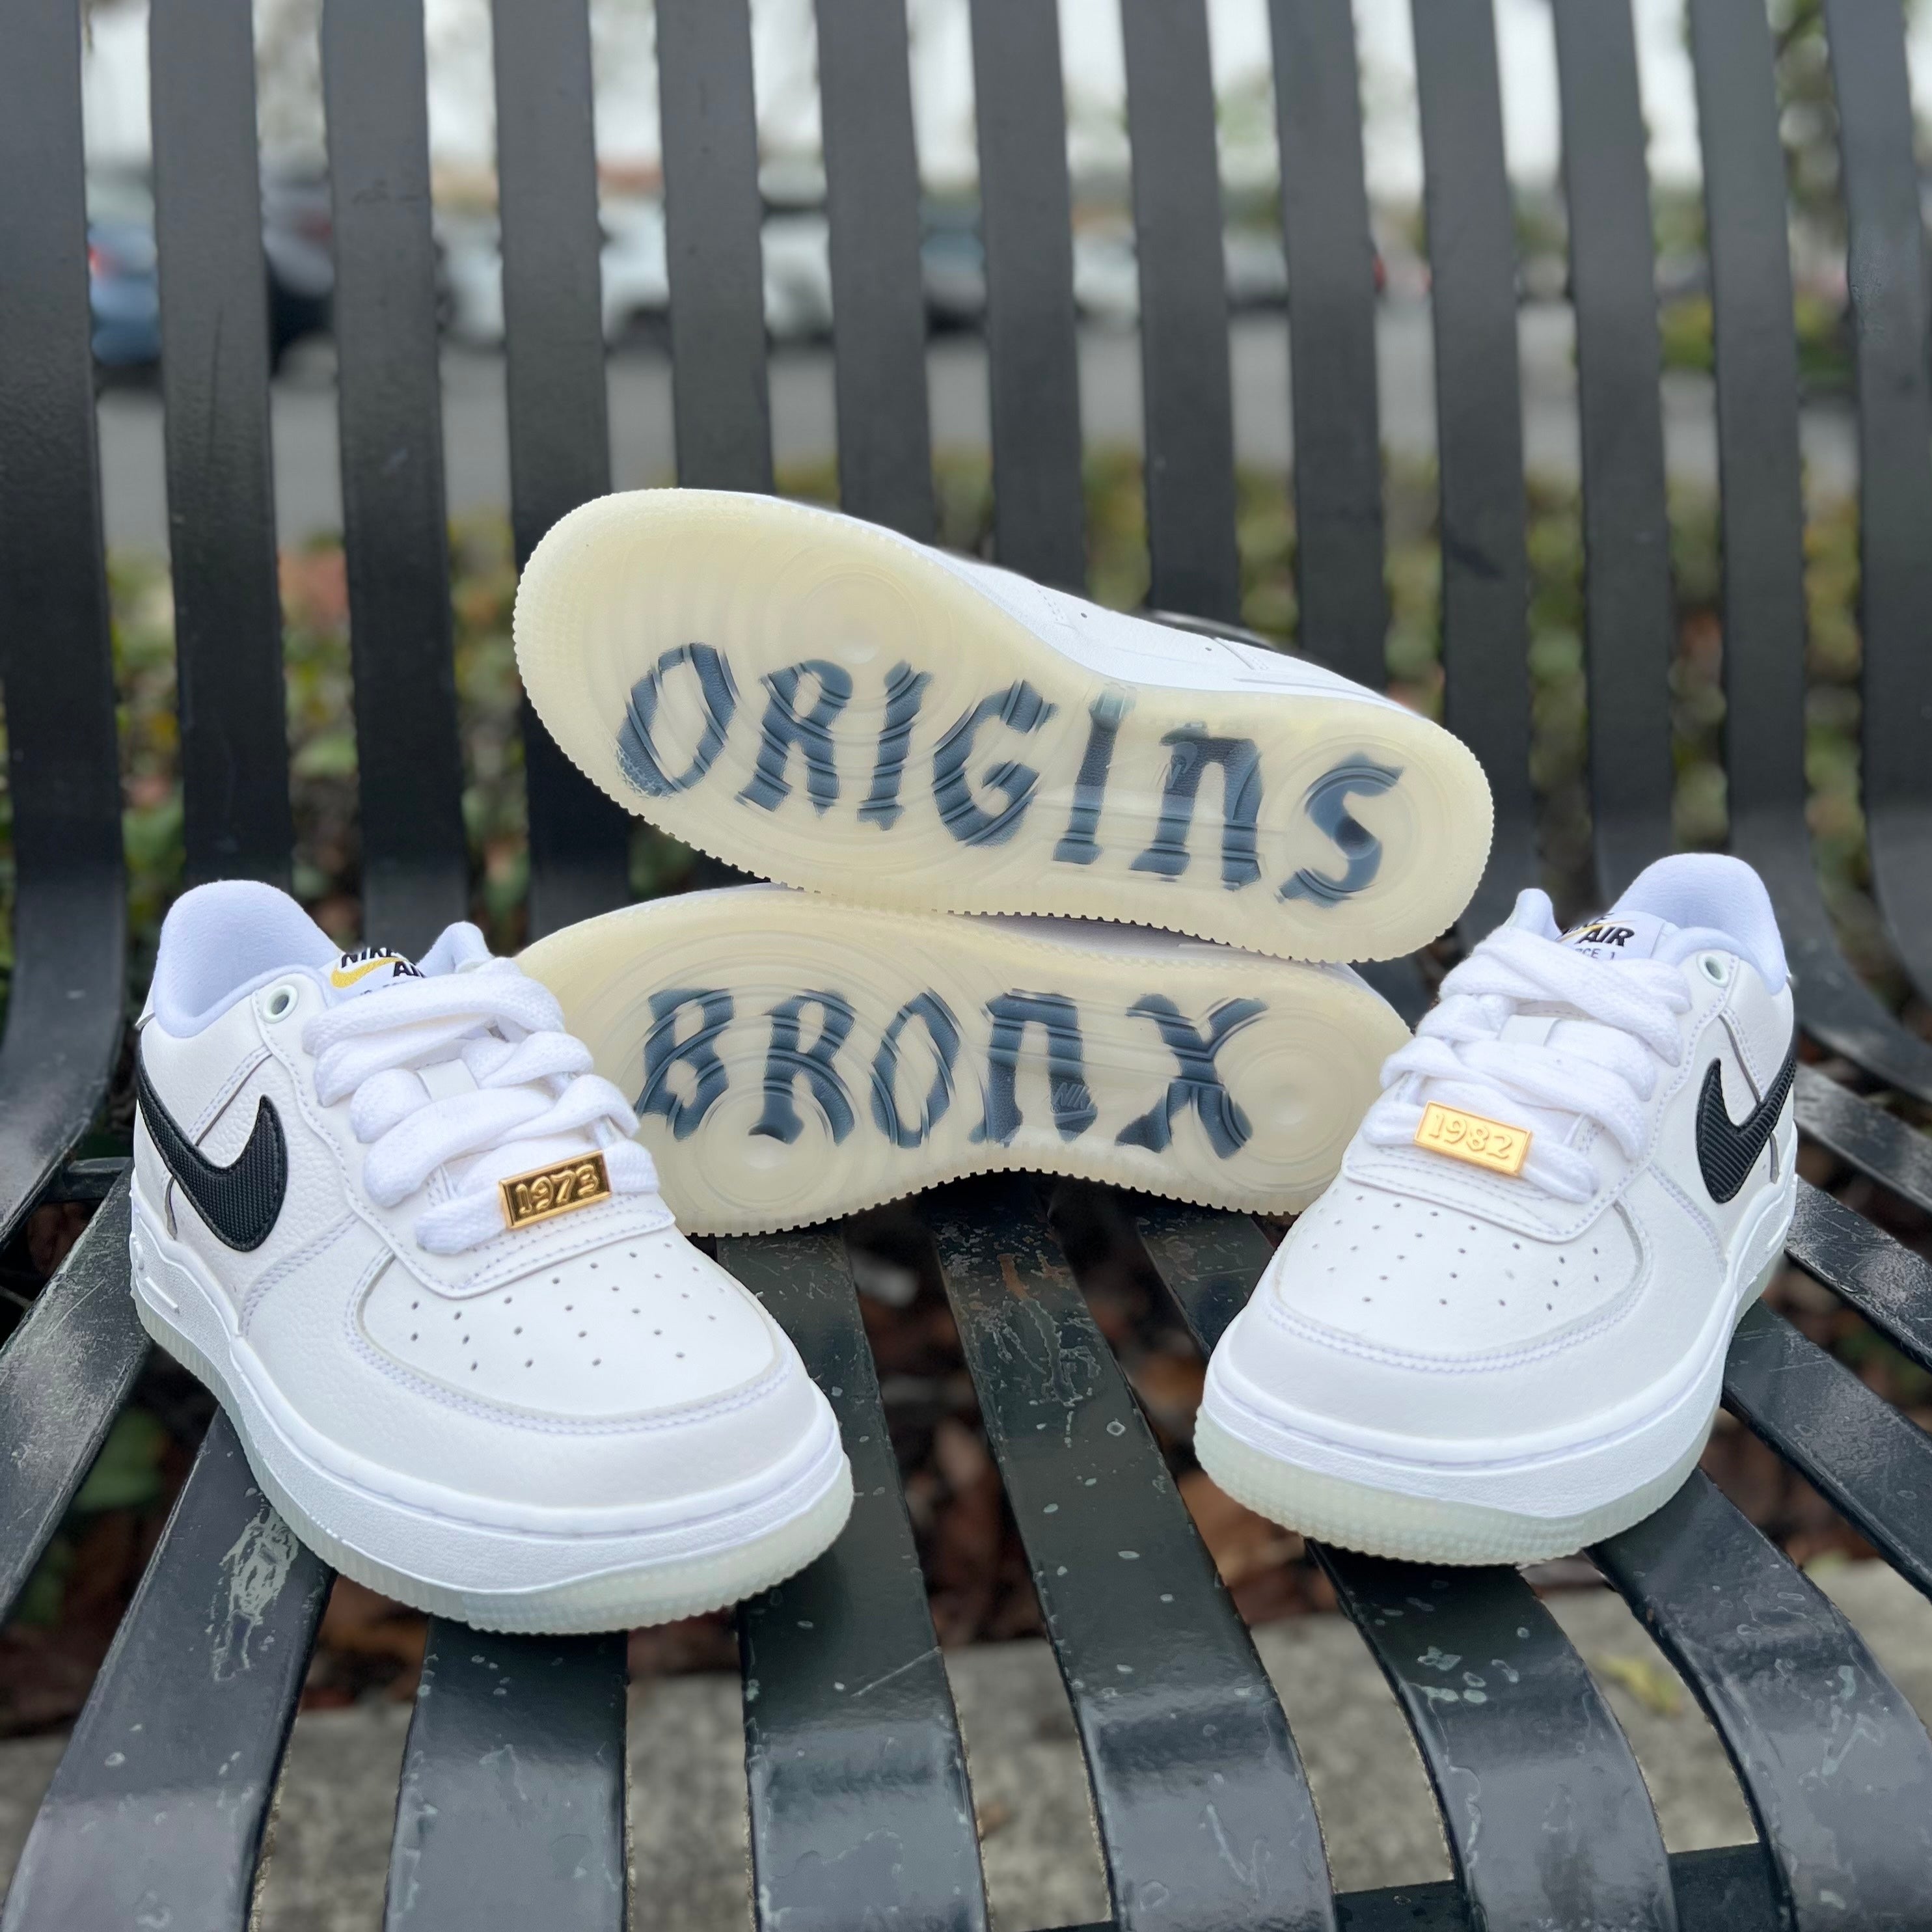 Where to Buy Nike Air Force 1 Bronx Origins